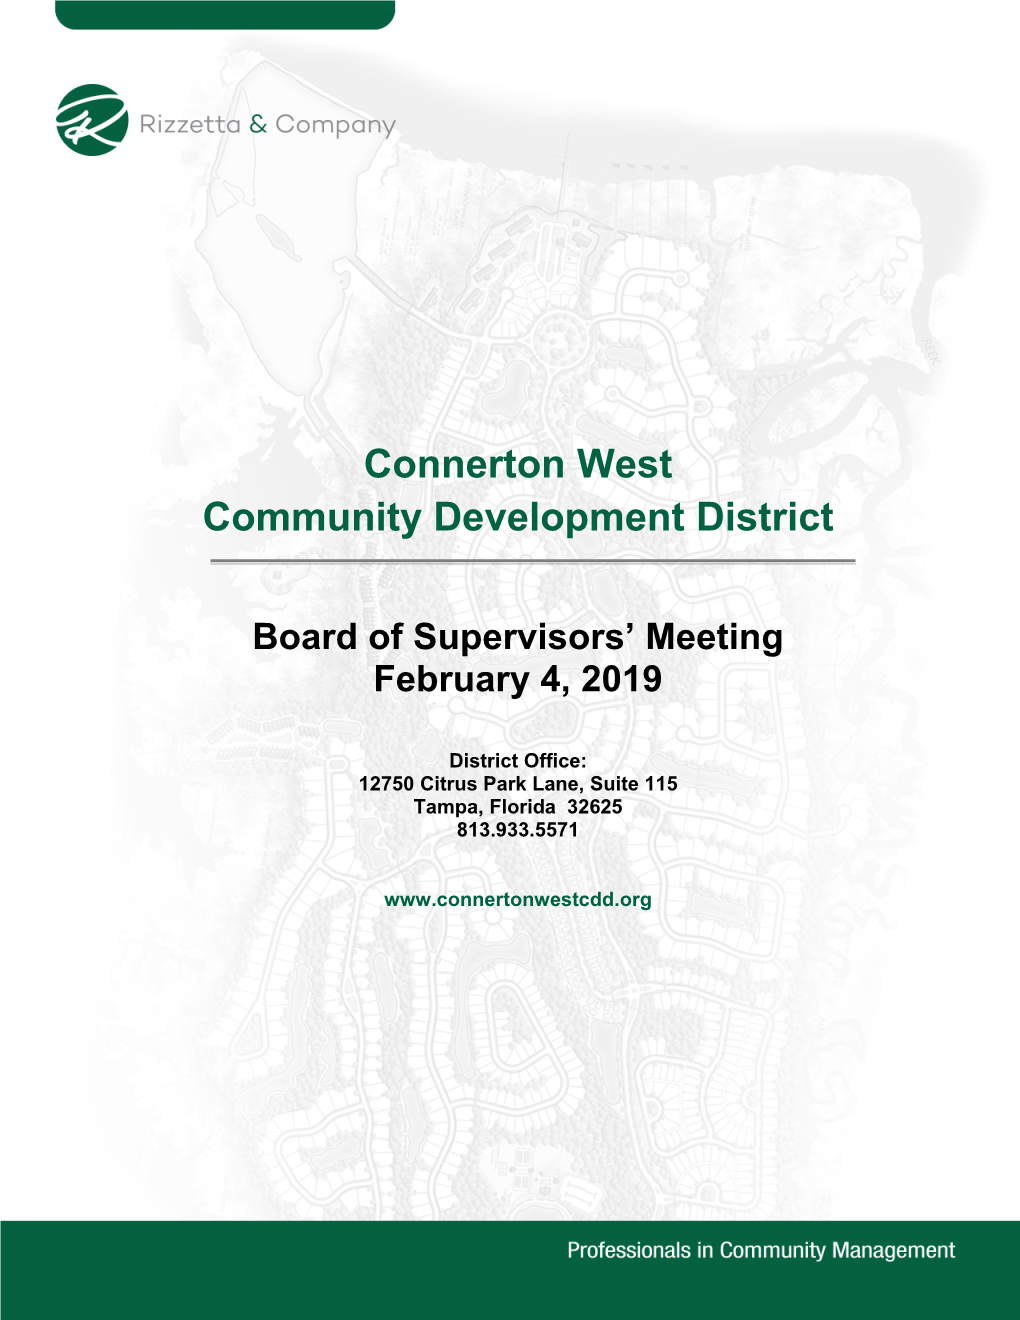 Board of Supervisors' Meeting February 4, 2019